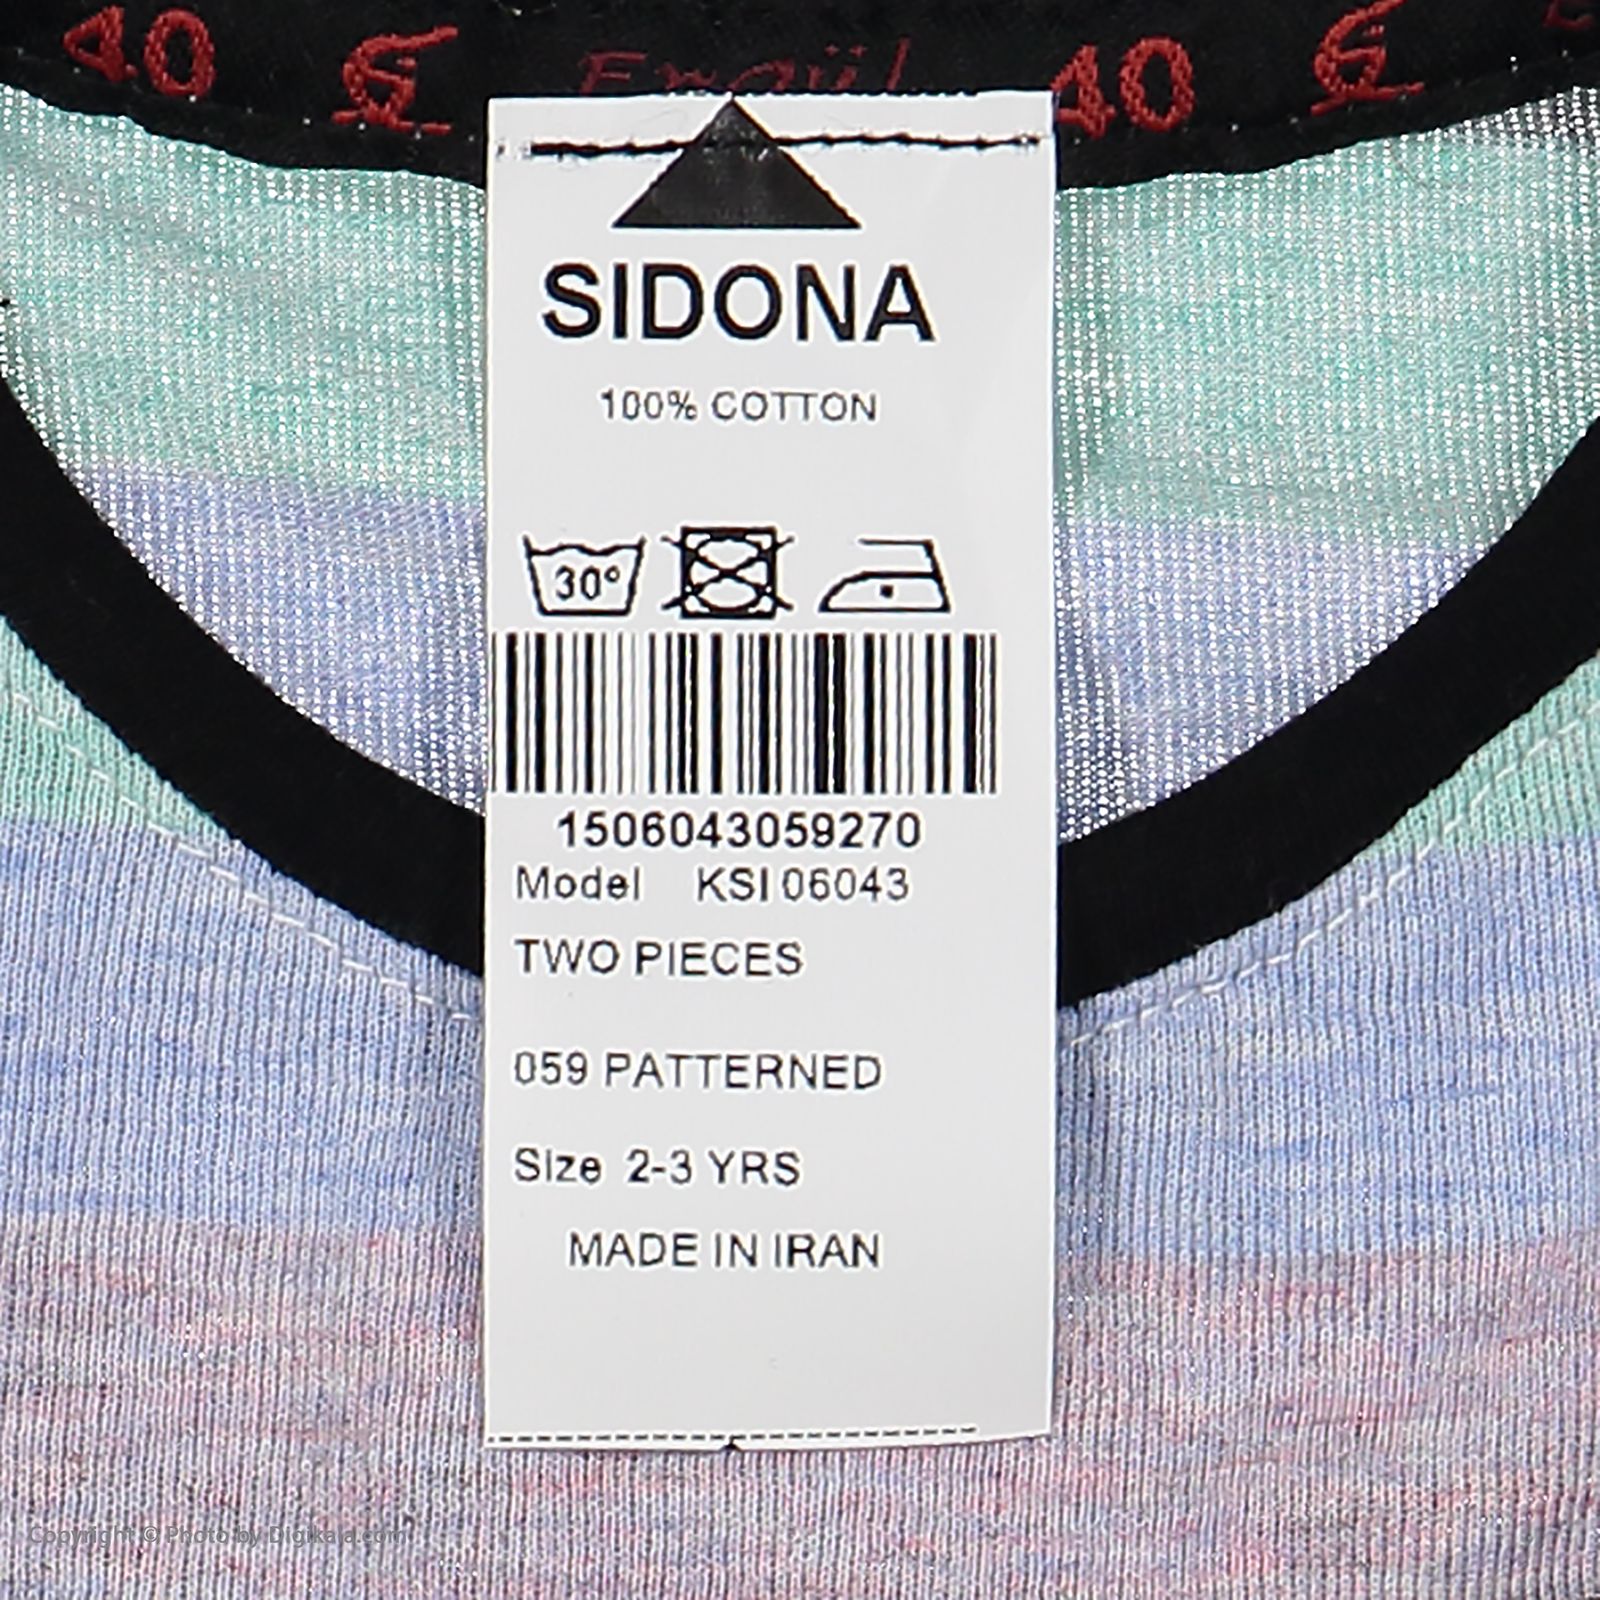 ست تی شرت و شلوارک پسرانه سیدونا مدل KSI06043-059 -  - 7